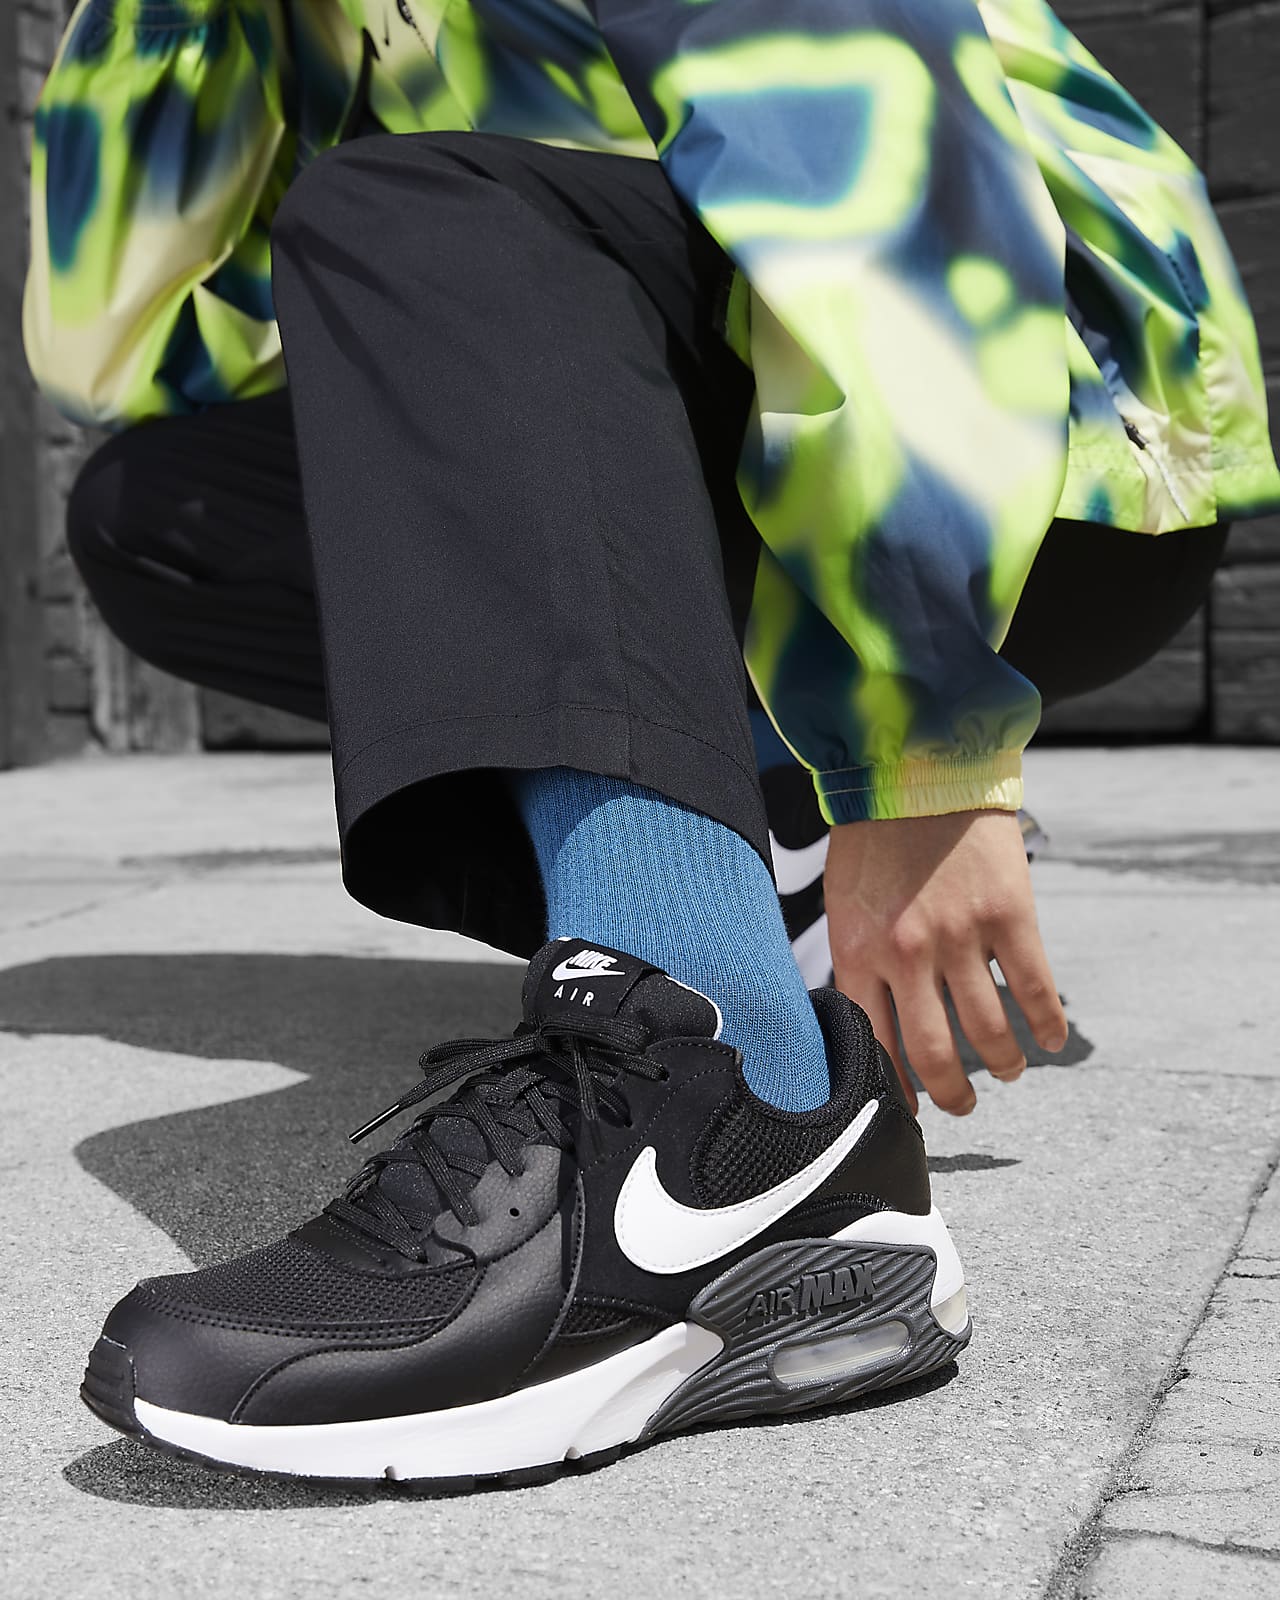 Chaussures et baskets pour homme. Nike FR